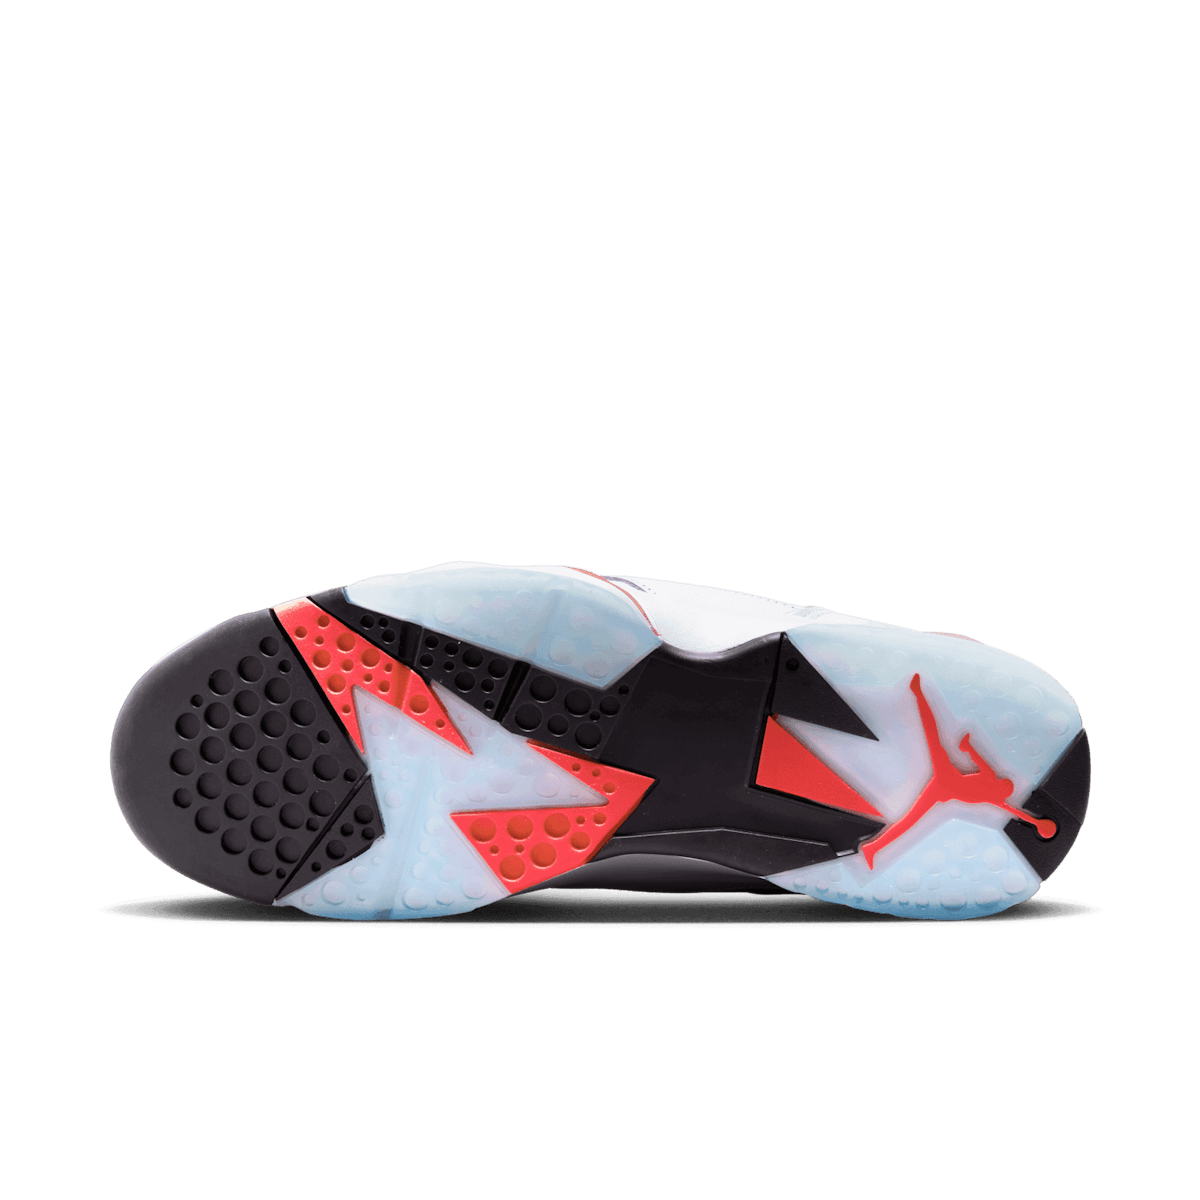 Air Jordan 7 Retro White Infrared Angle 0